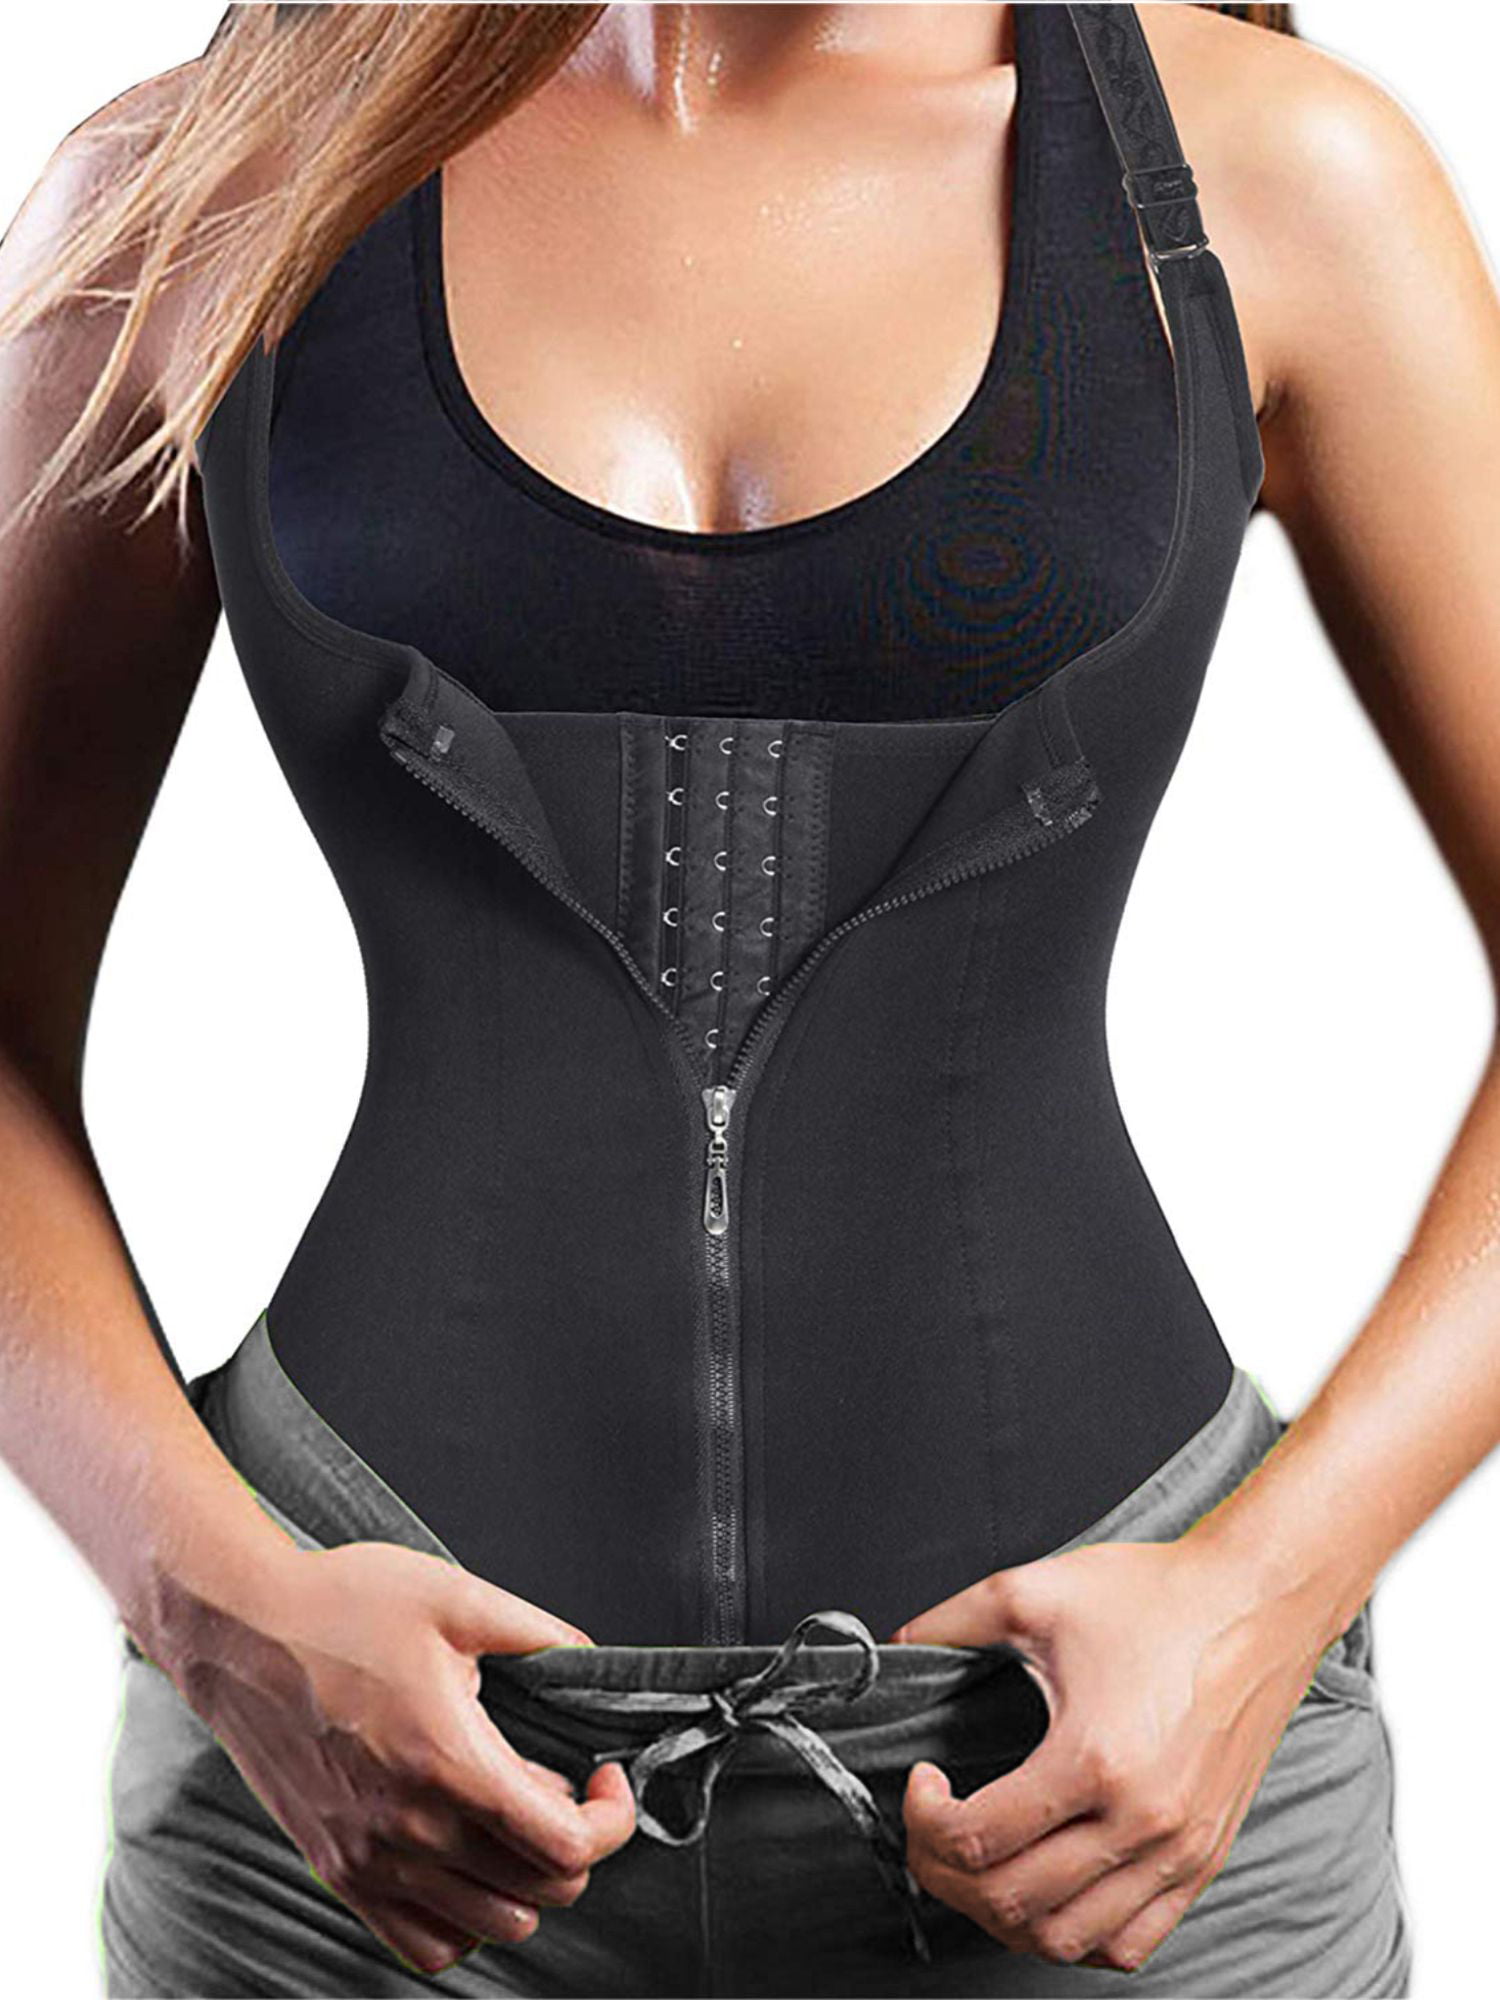 Lilight Waist Trainer Corset for Women Adjustable Underbust Cincher Weight Loss Body Shaper Vest